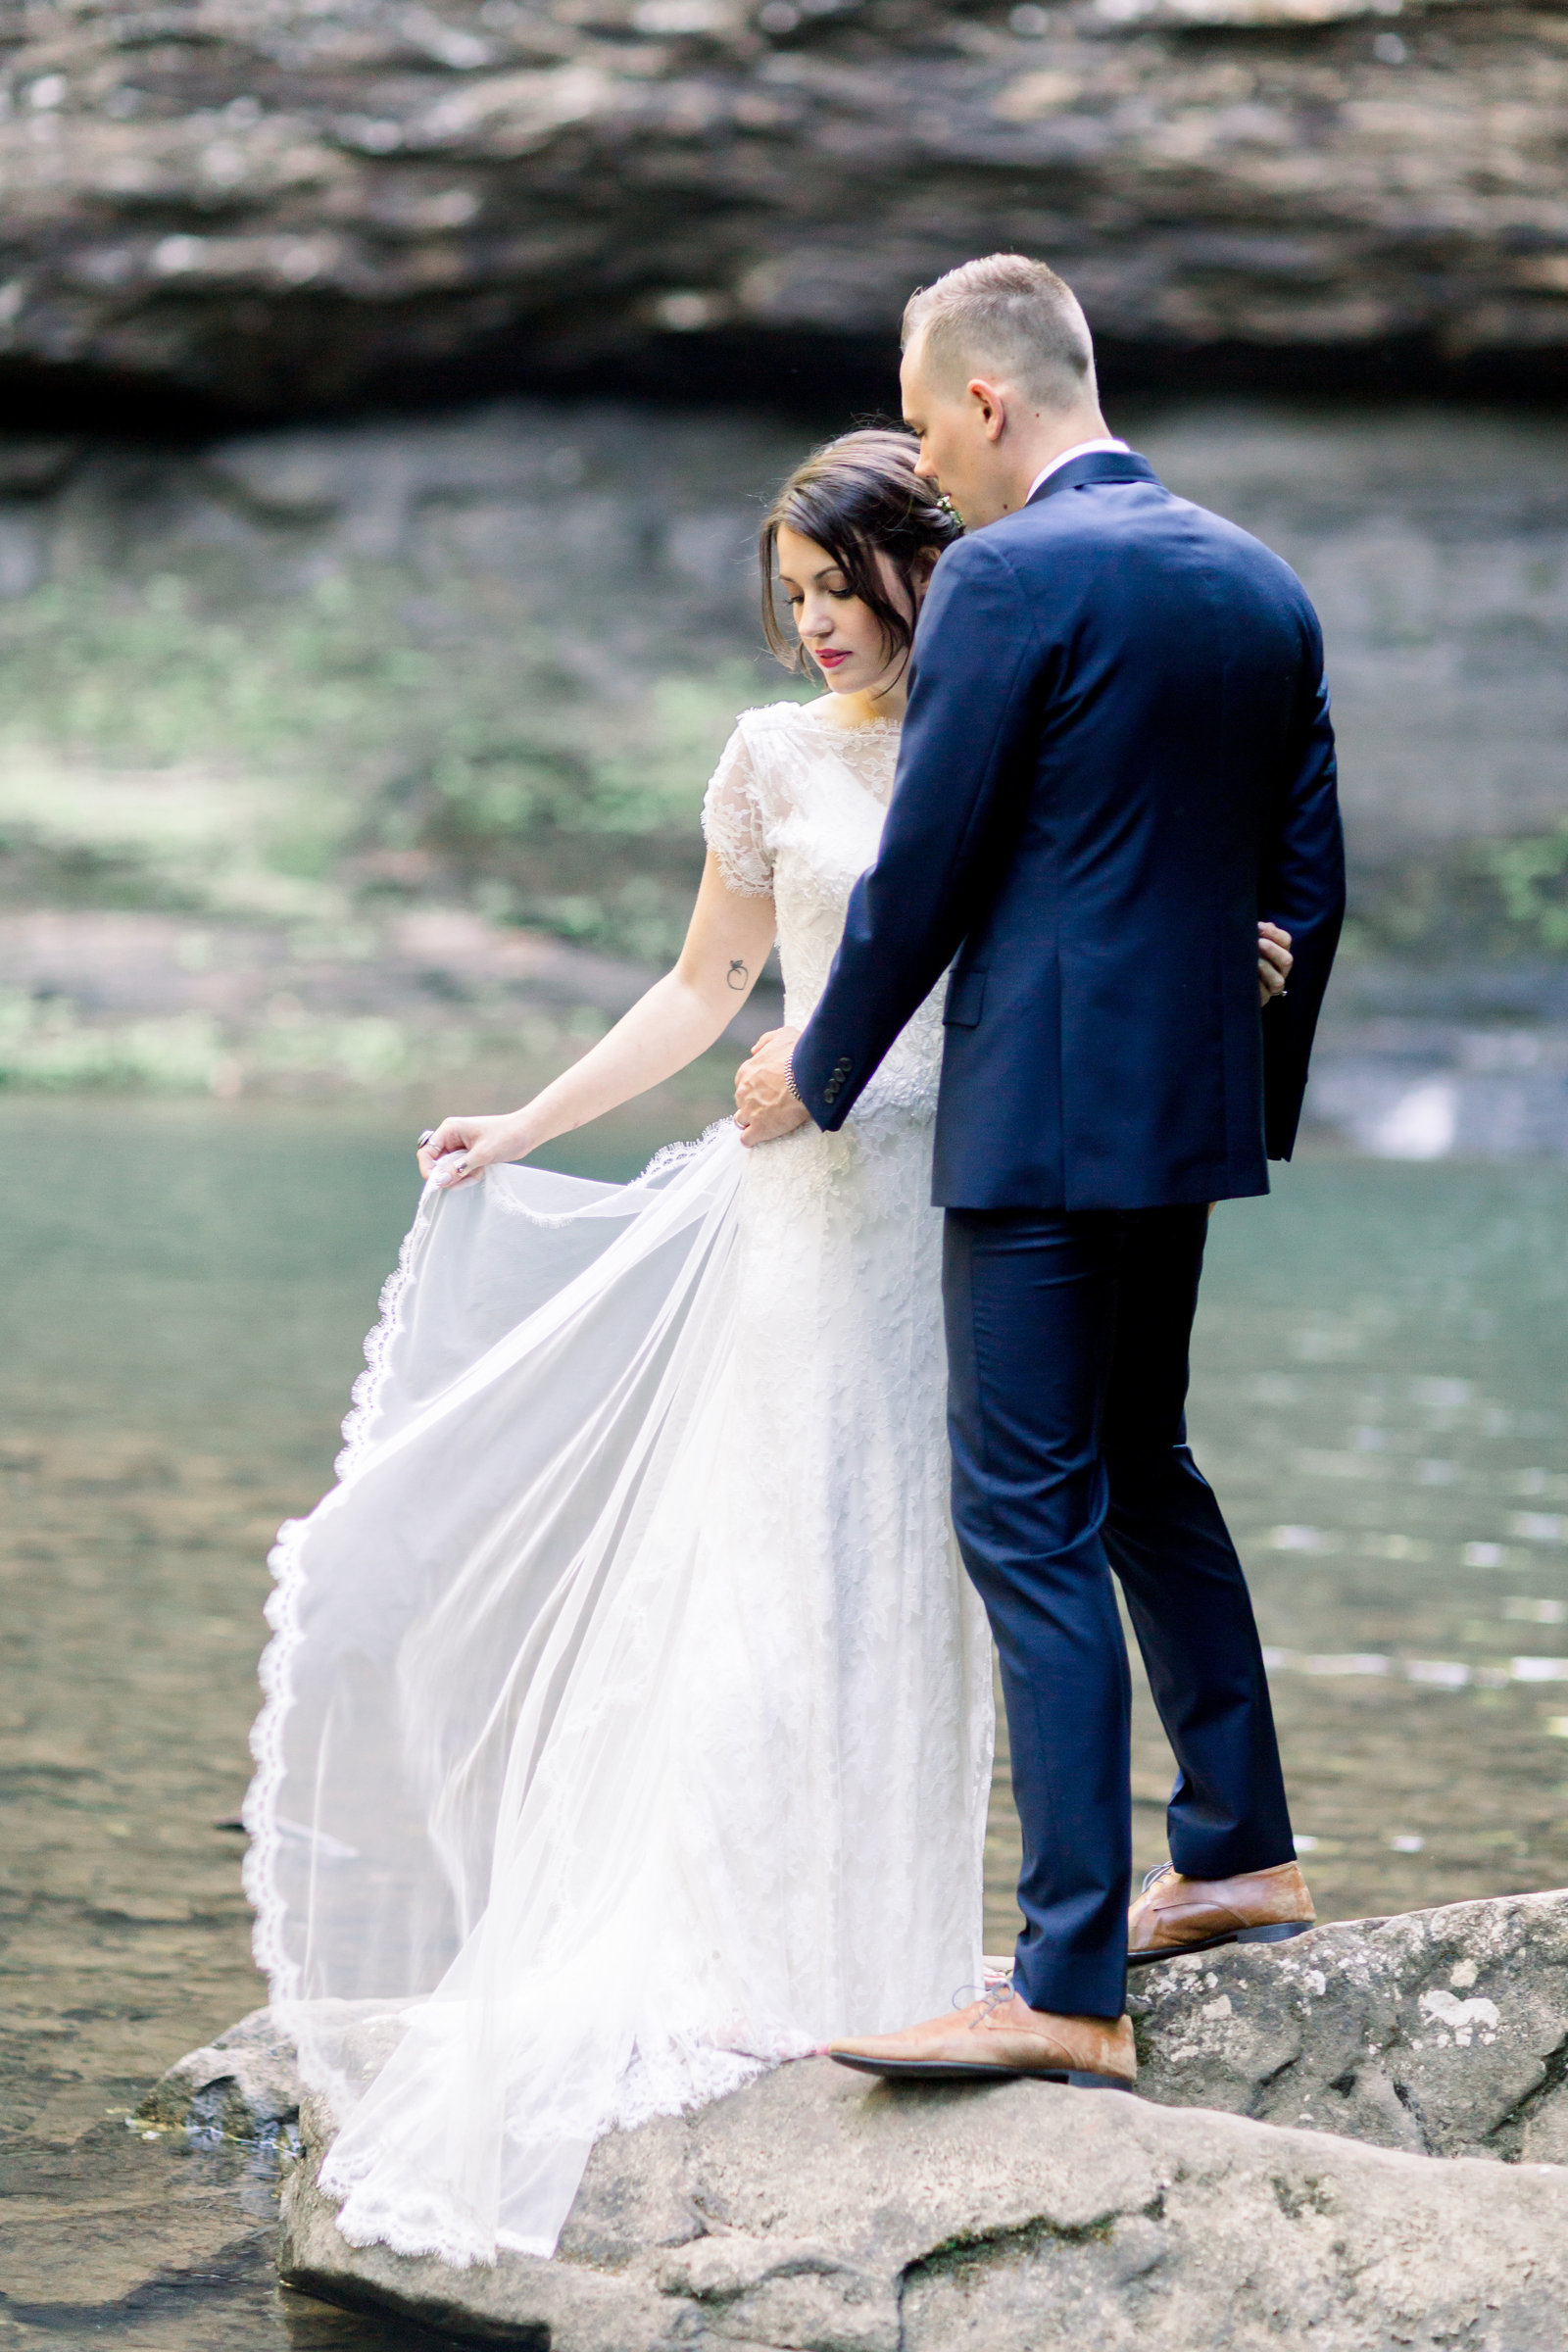 Genuine Wedding Photography for Joyful Couples